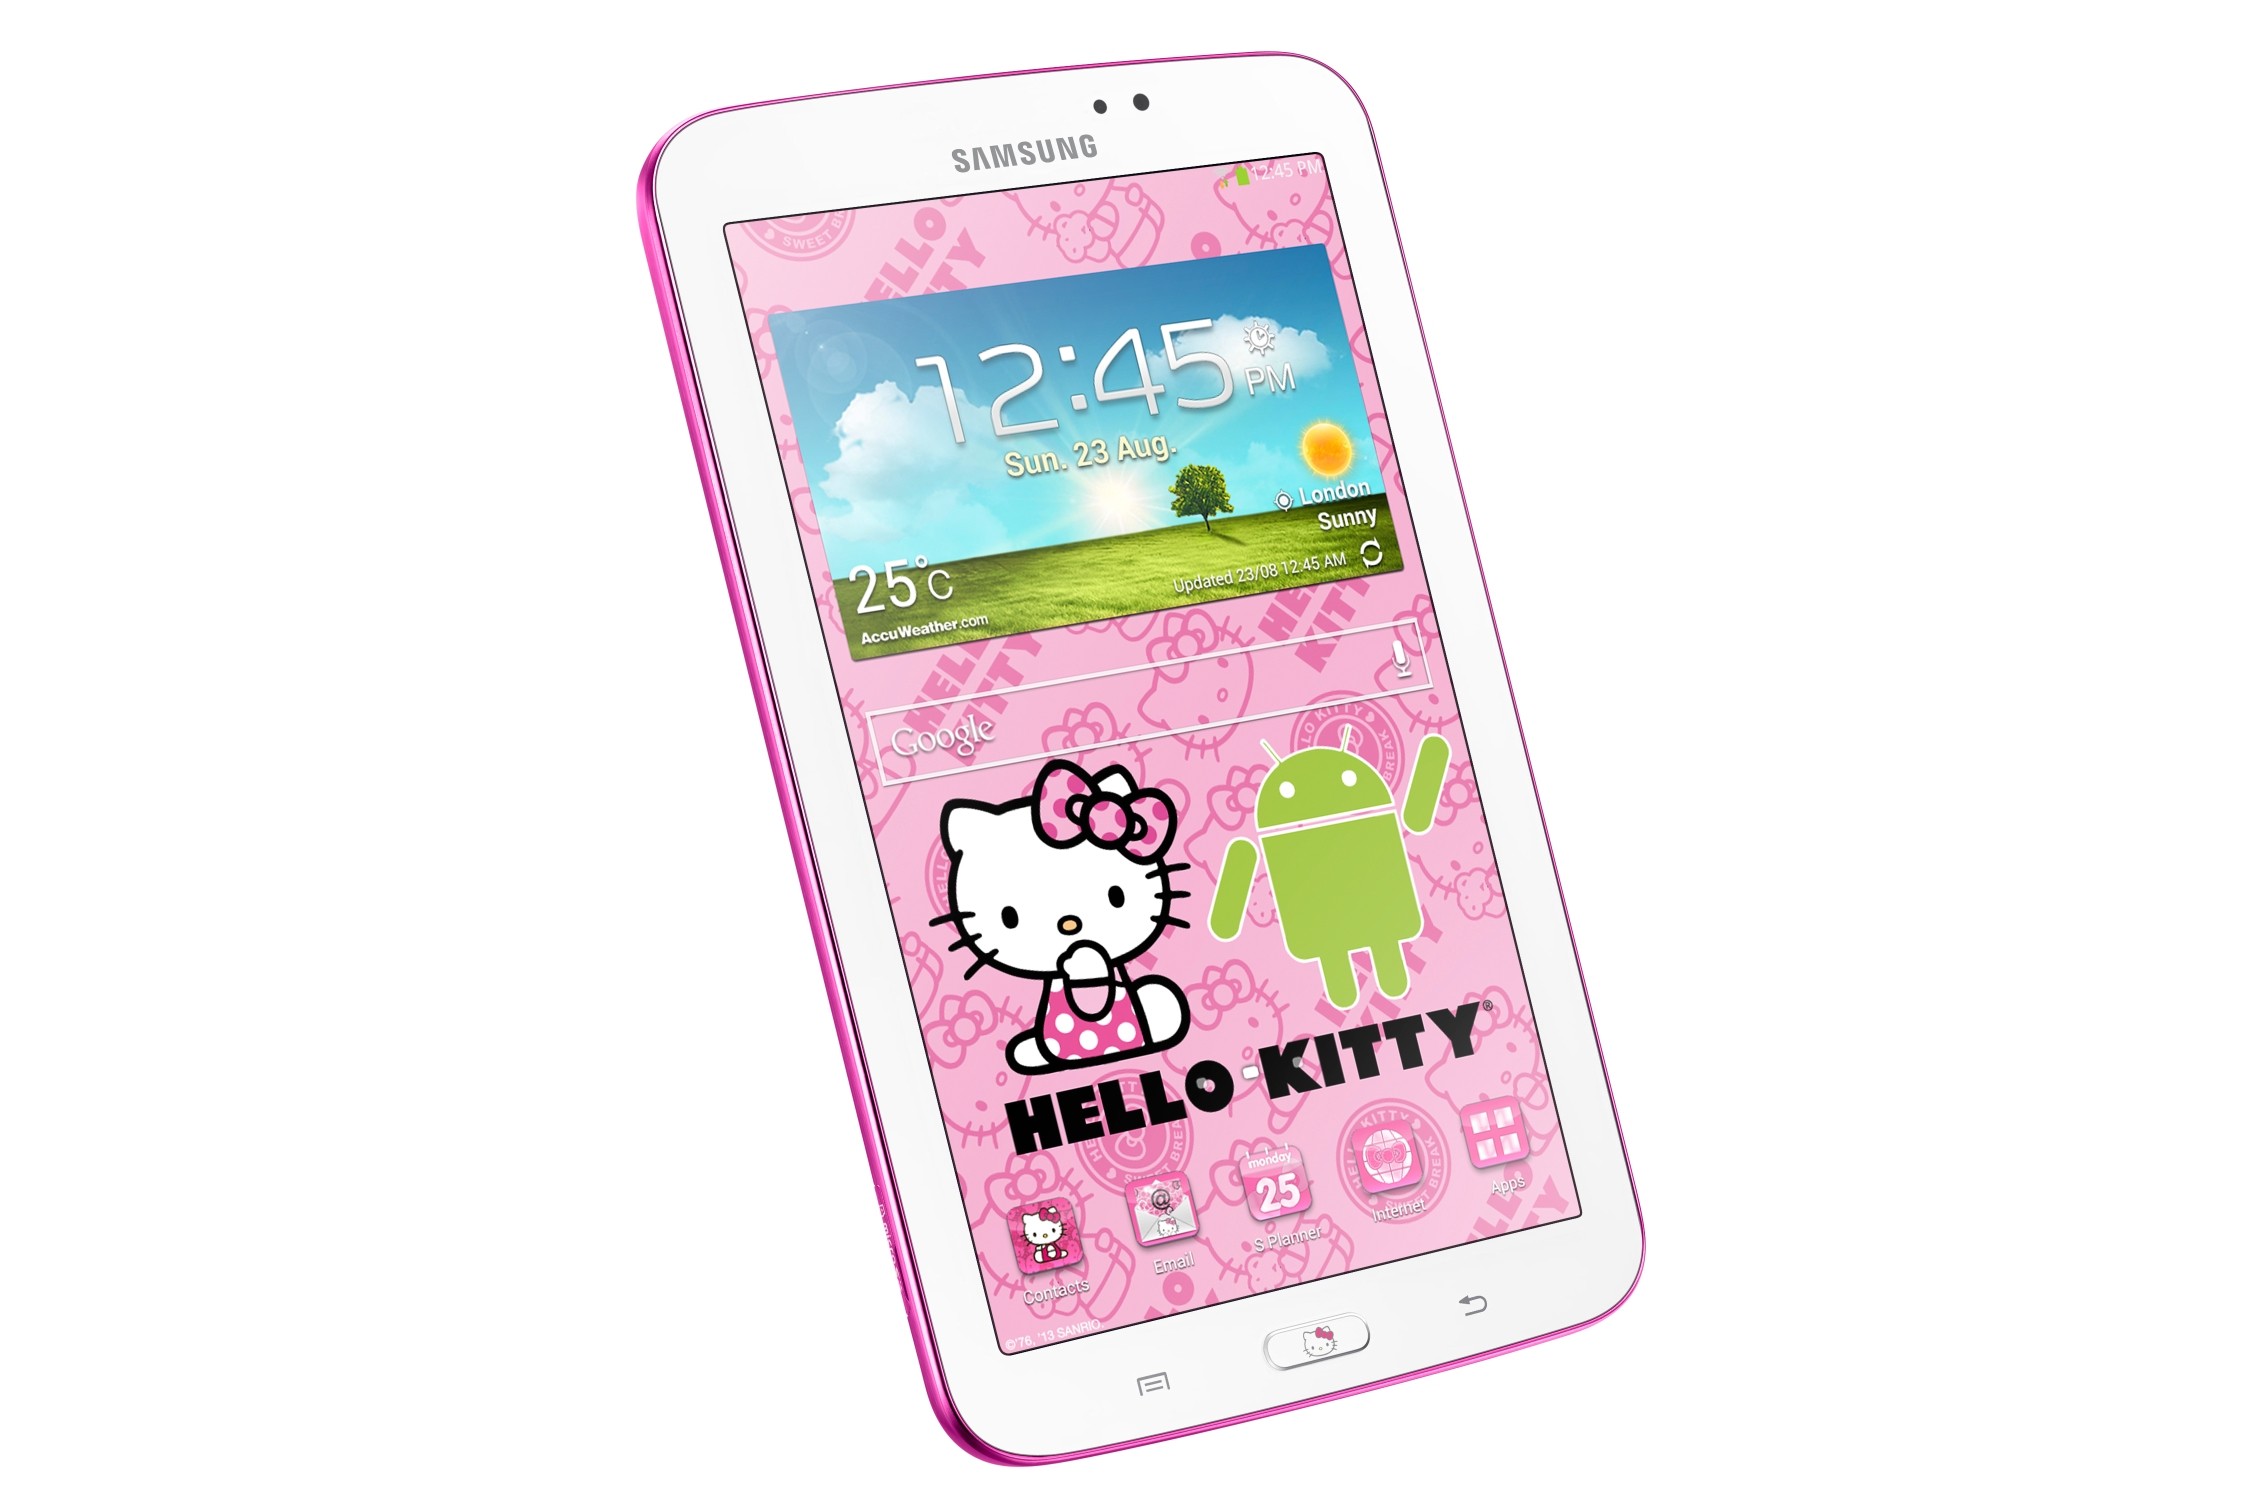 2250x1500 Samsung GALAXY Tab 3 7.0 WiFi Hello Kitty Edition - left angle